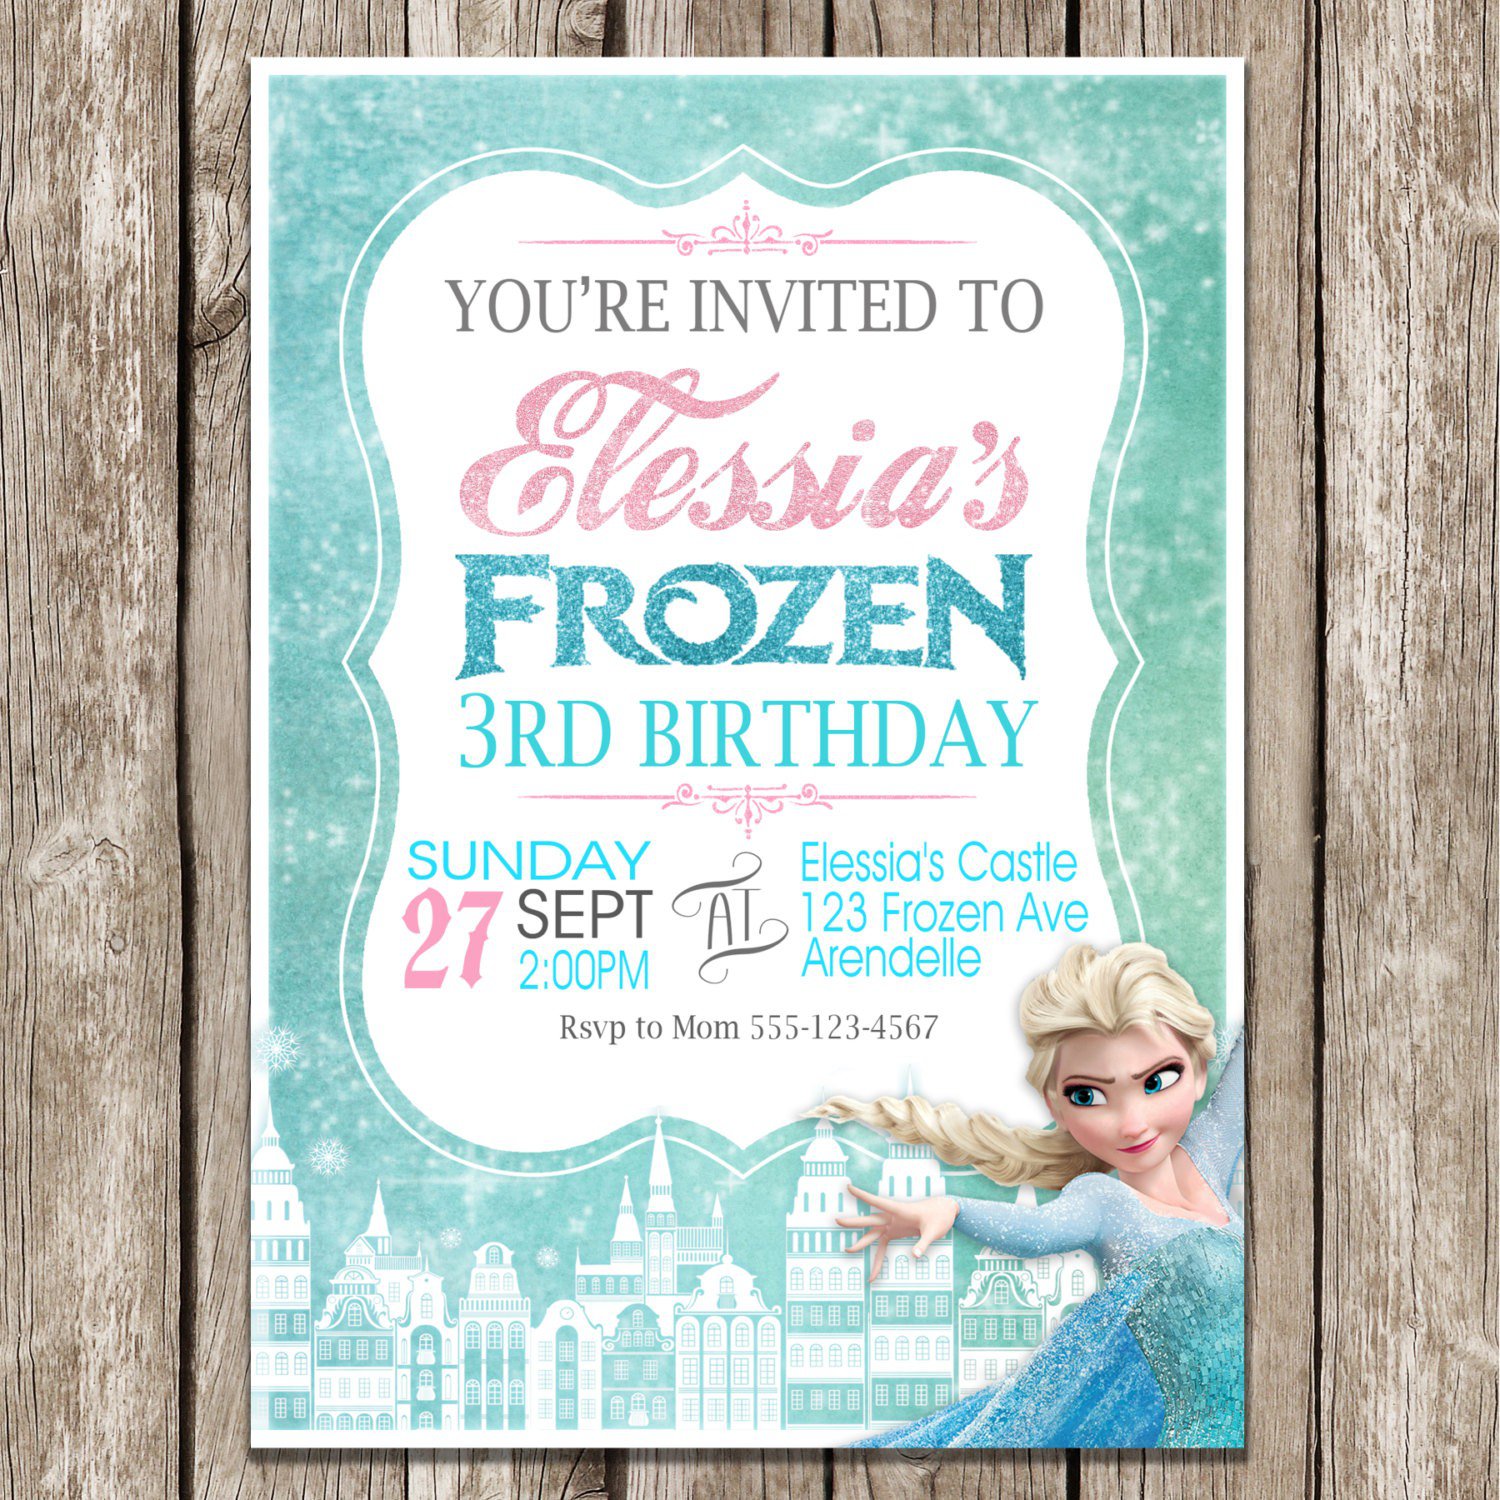 Snowflake Birthday Invitations